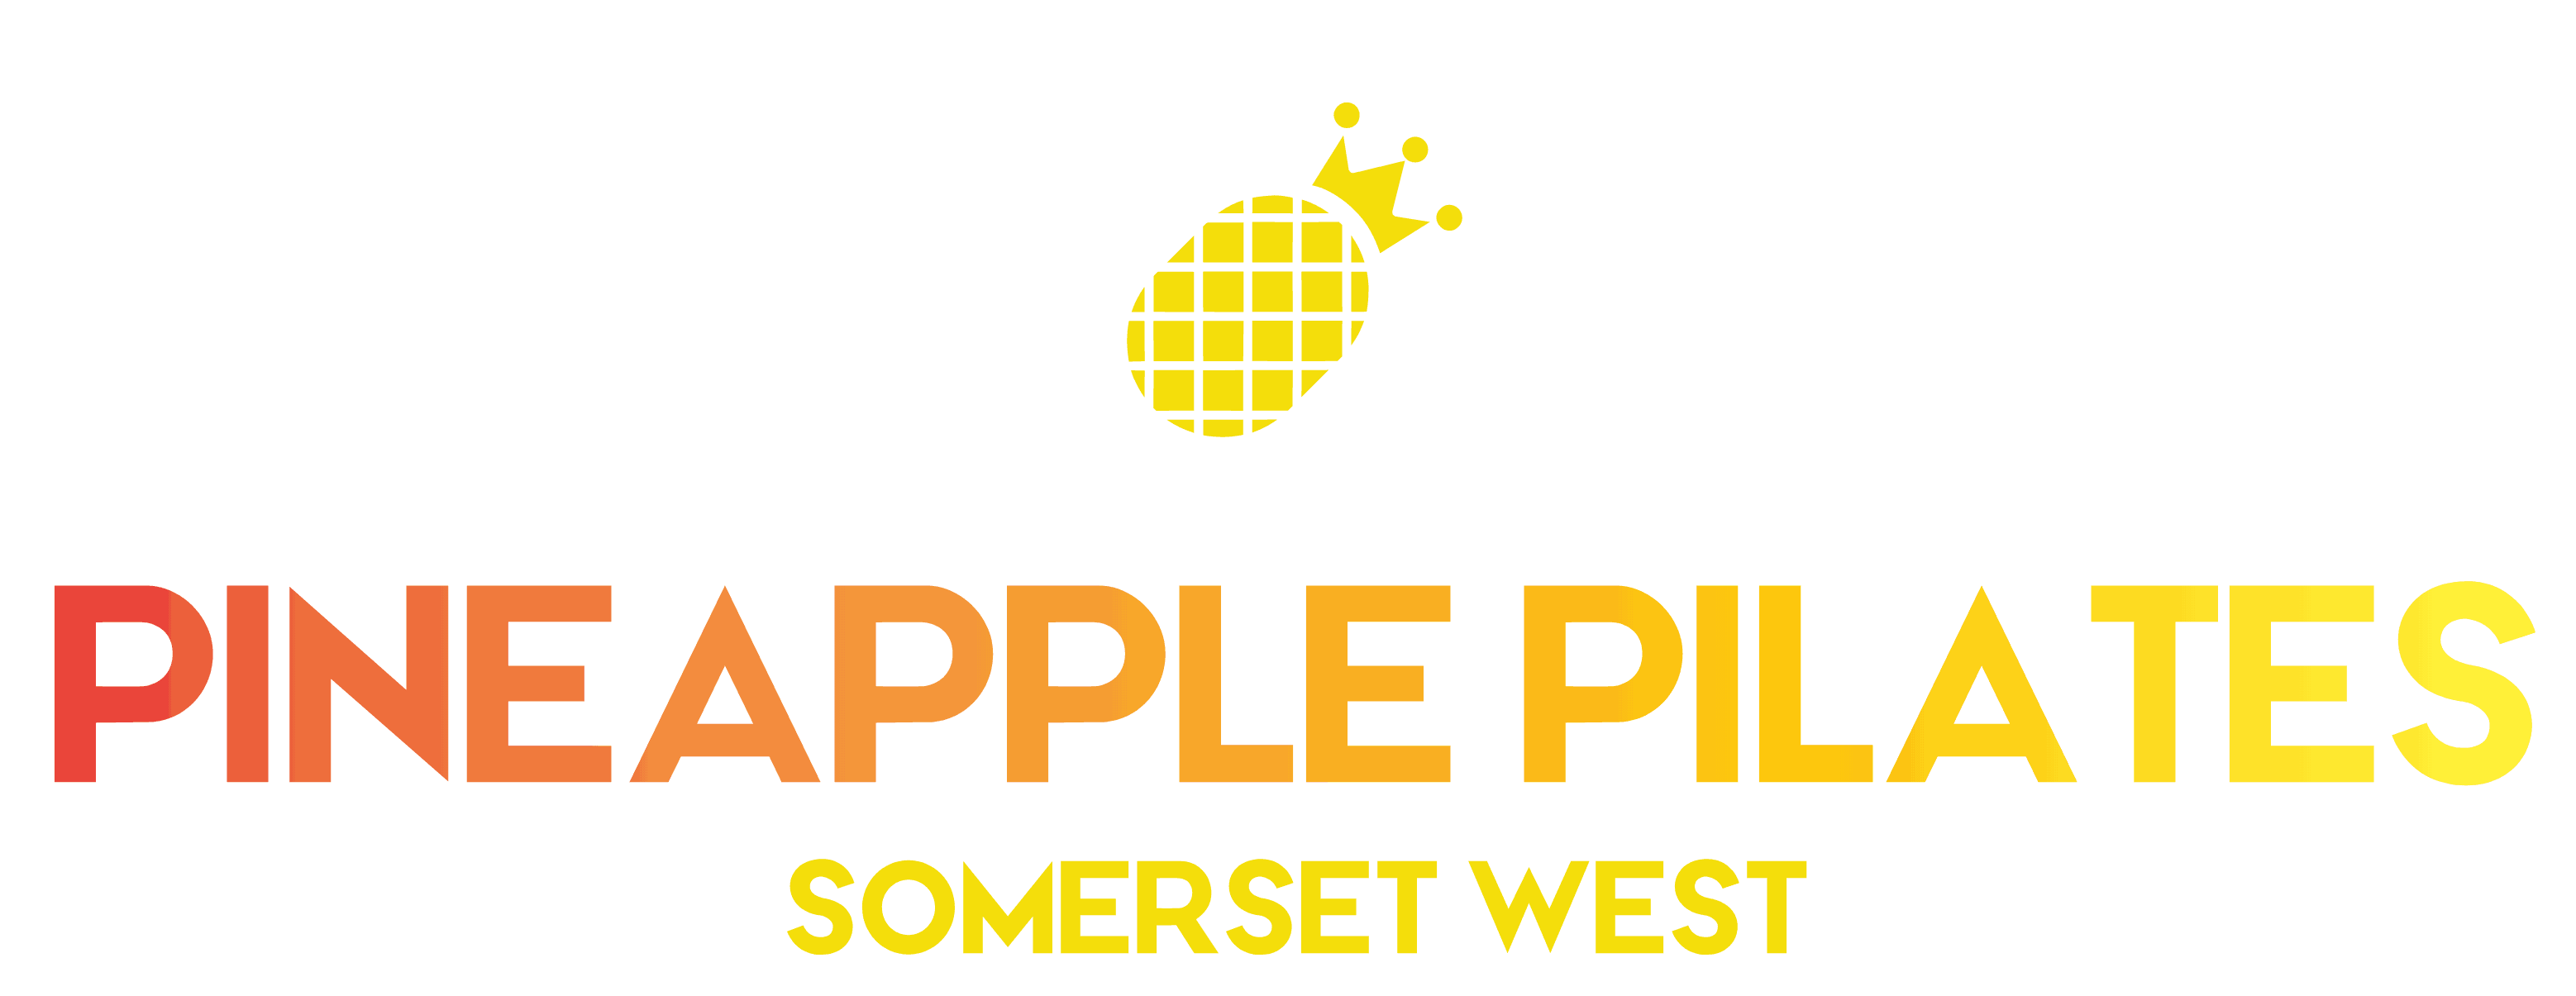 Pineapple Pilates Somerset West